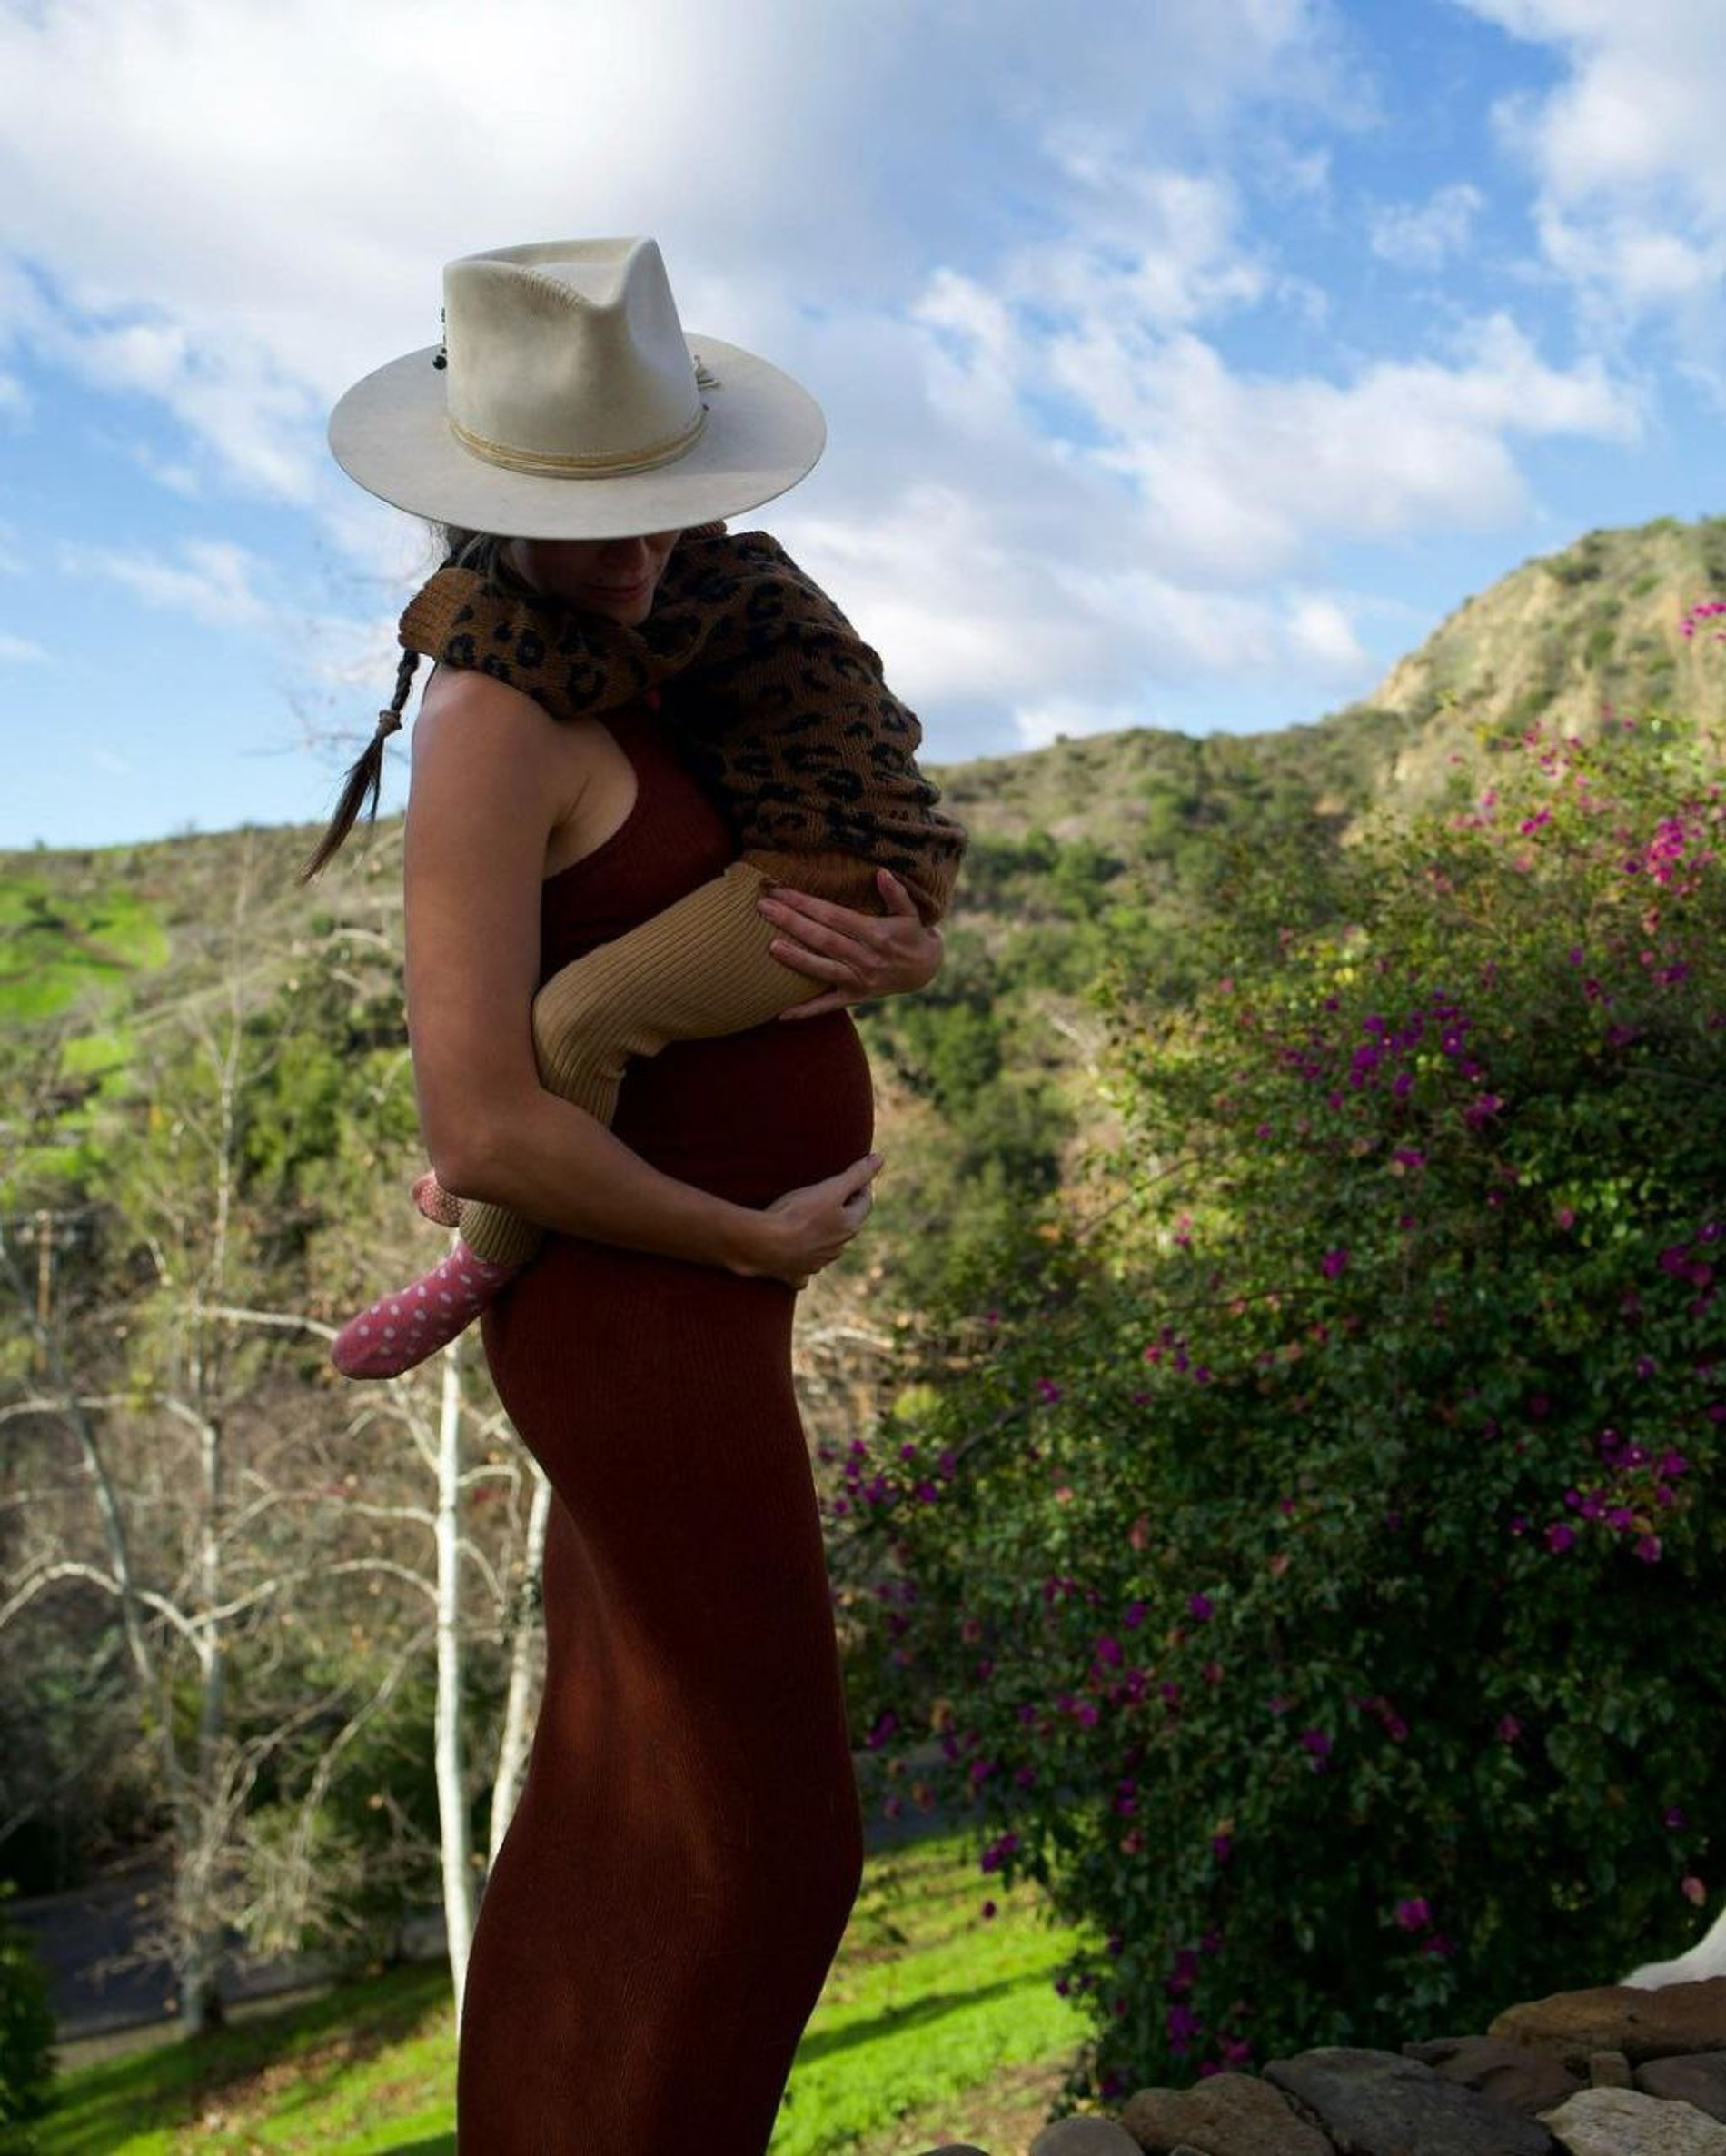 Никки Рид беременна во второй раз
Фото: Инстаграм (запрещен в РФ) Иэна Сомерхолдера